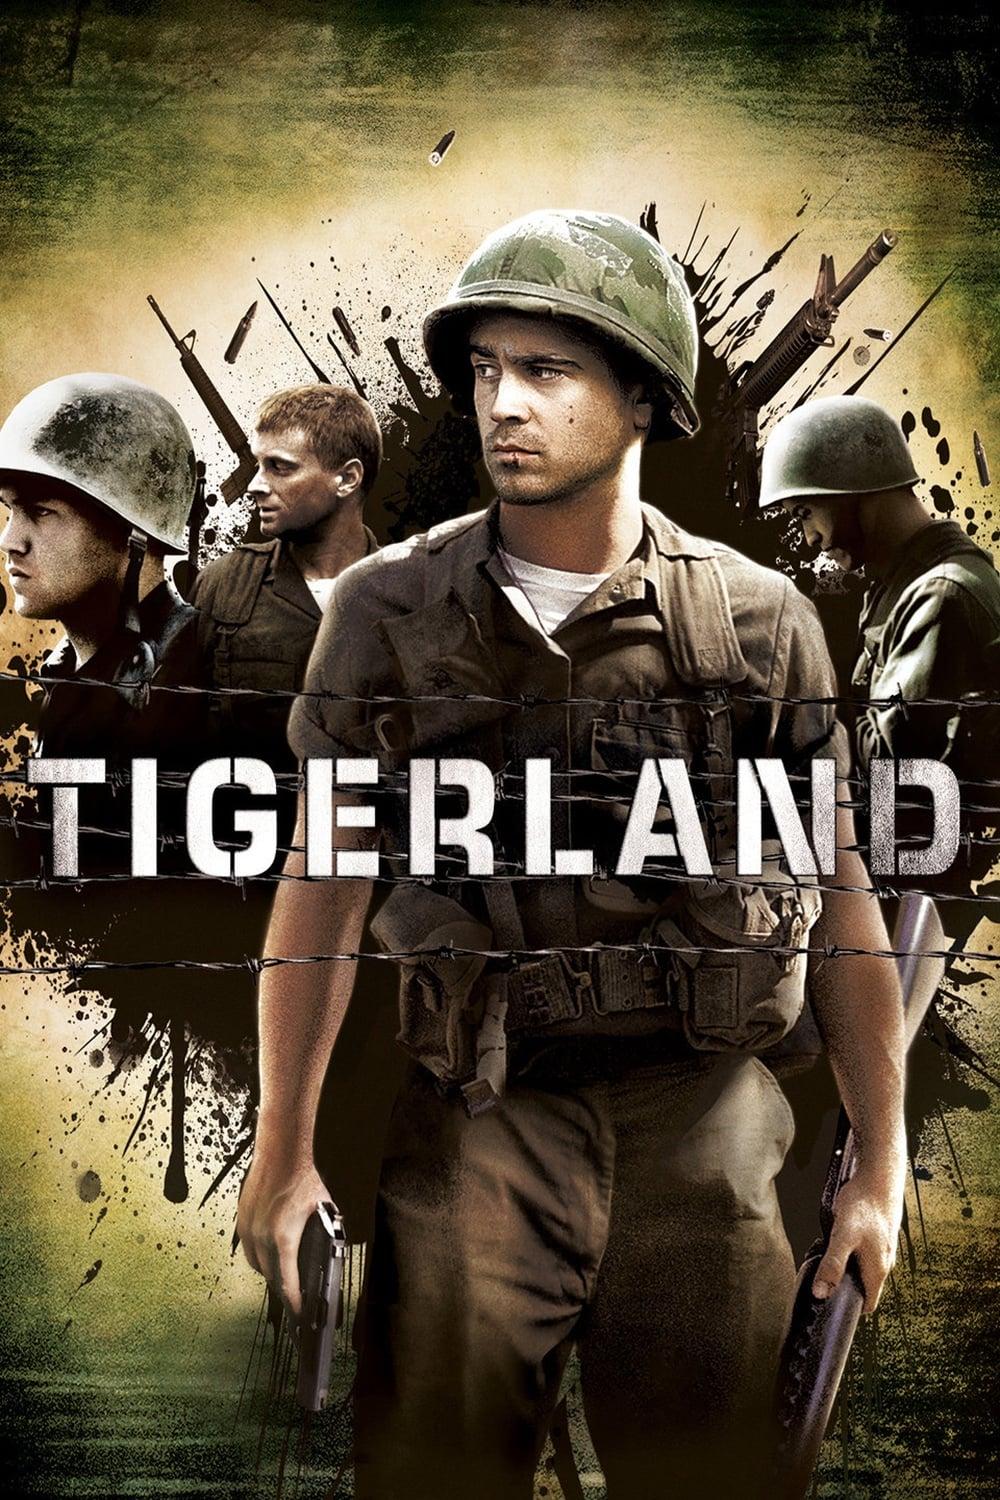 Tigerland poster